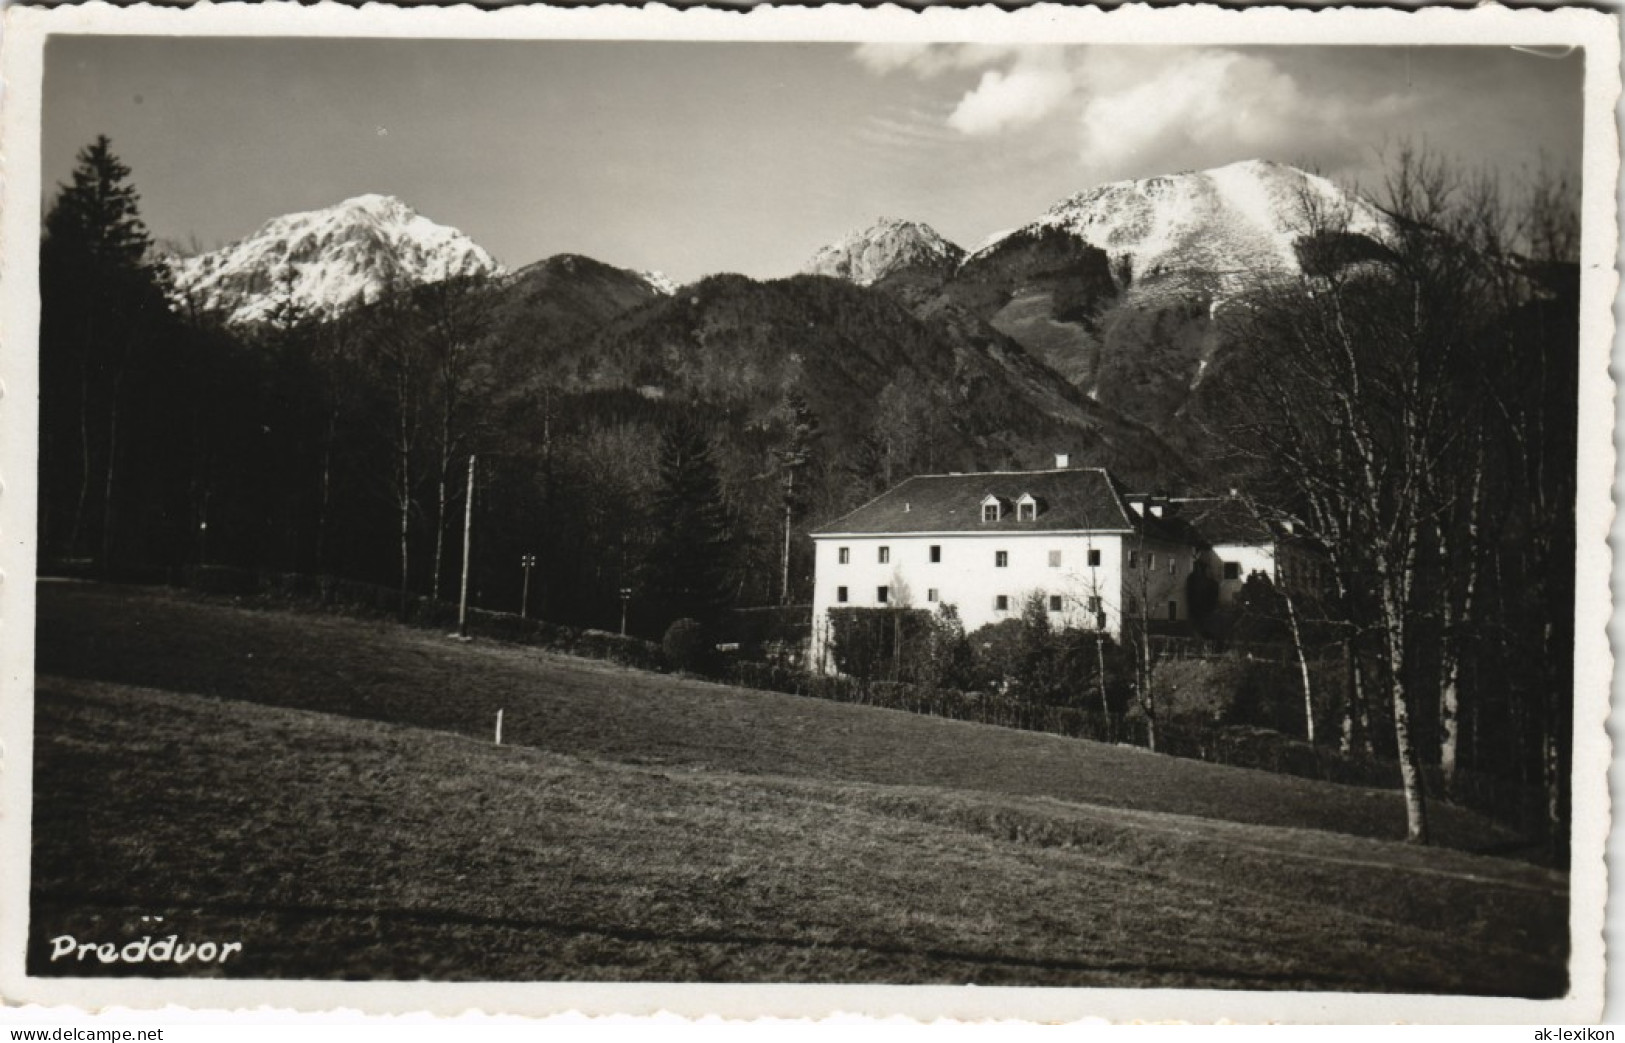 Foto Höflein Preddvor Totale, Berge Slovenia 1930 Privatfoto - Slovenia